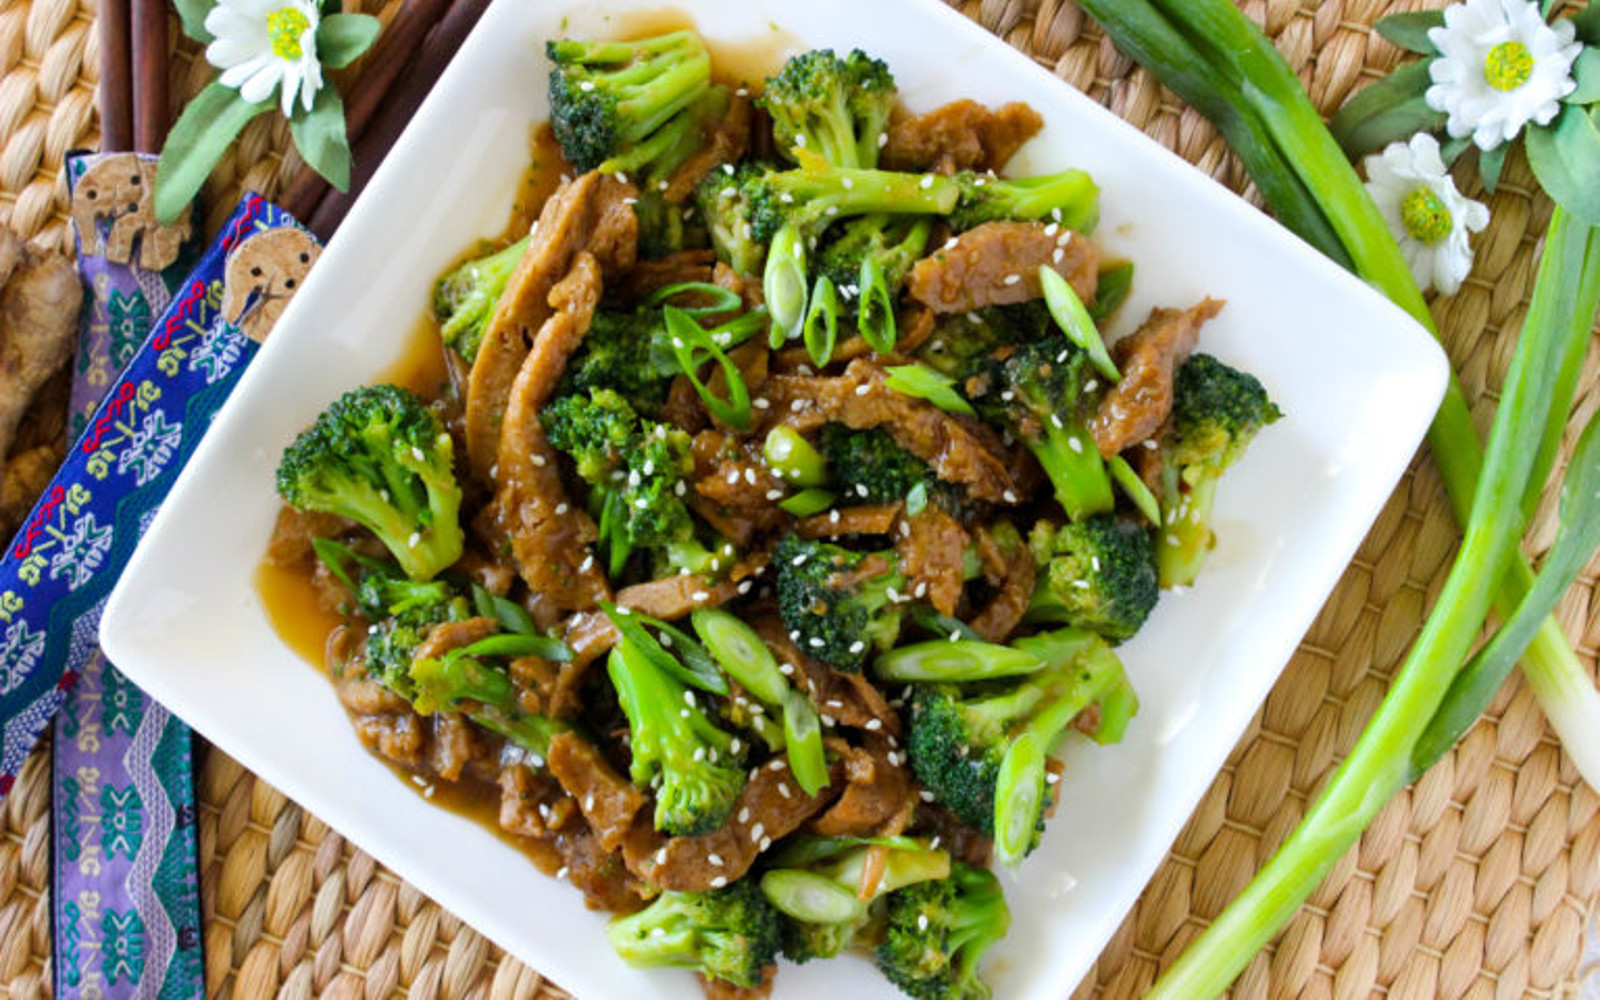 10-Minute Seitan “Beef” and Broccoli